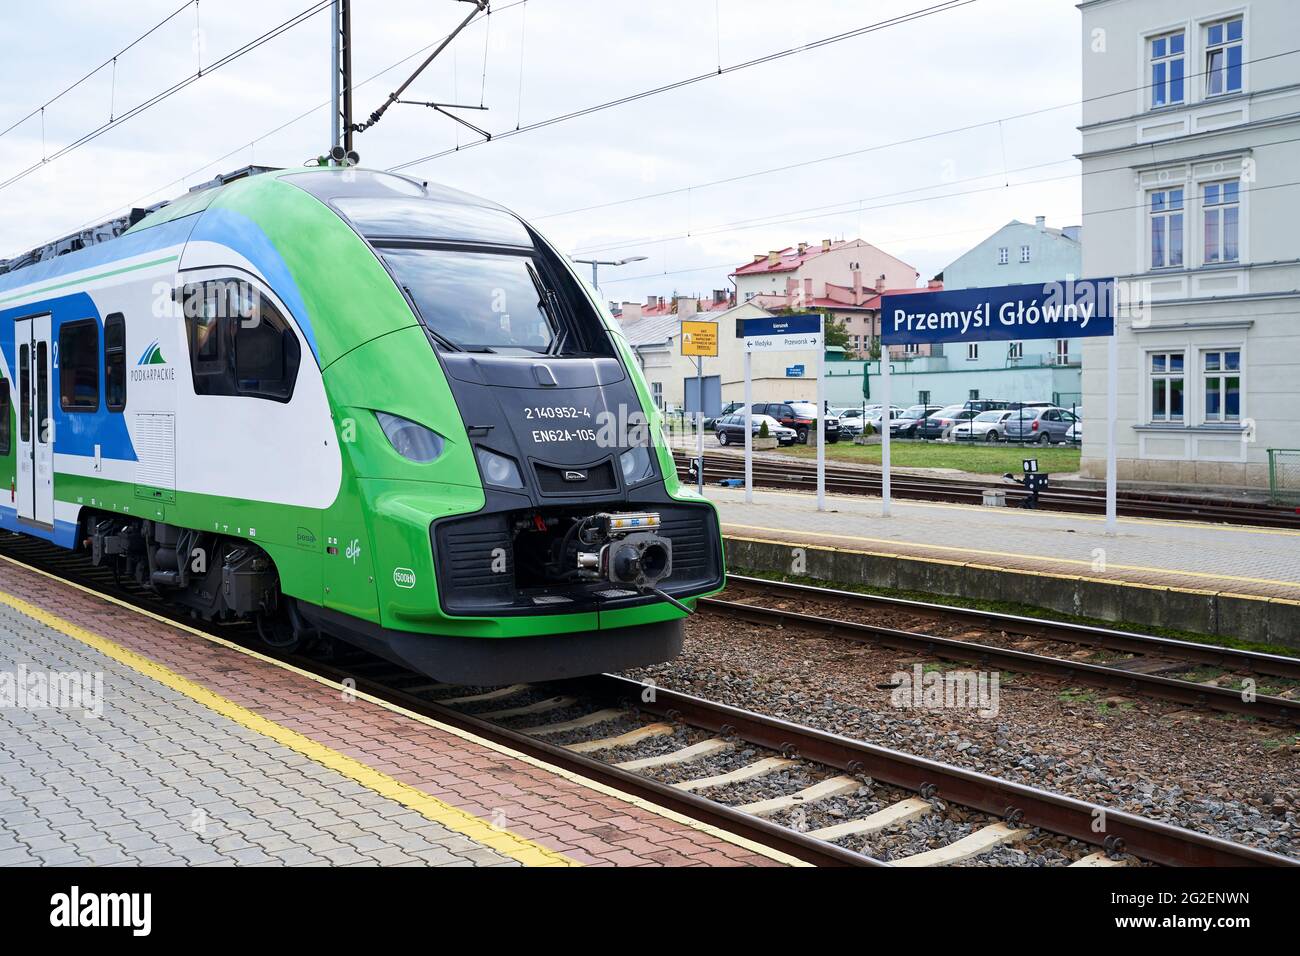 Przemysl, Poland, Oct 3, 2018: Passenger train of PKP Intercity at the main railway station of Przemysl. Stock Photo